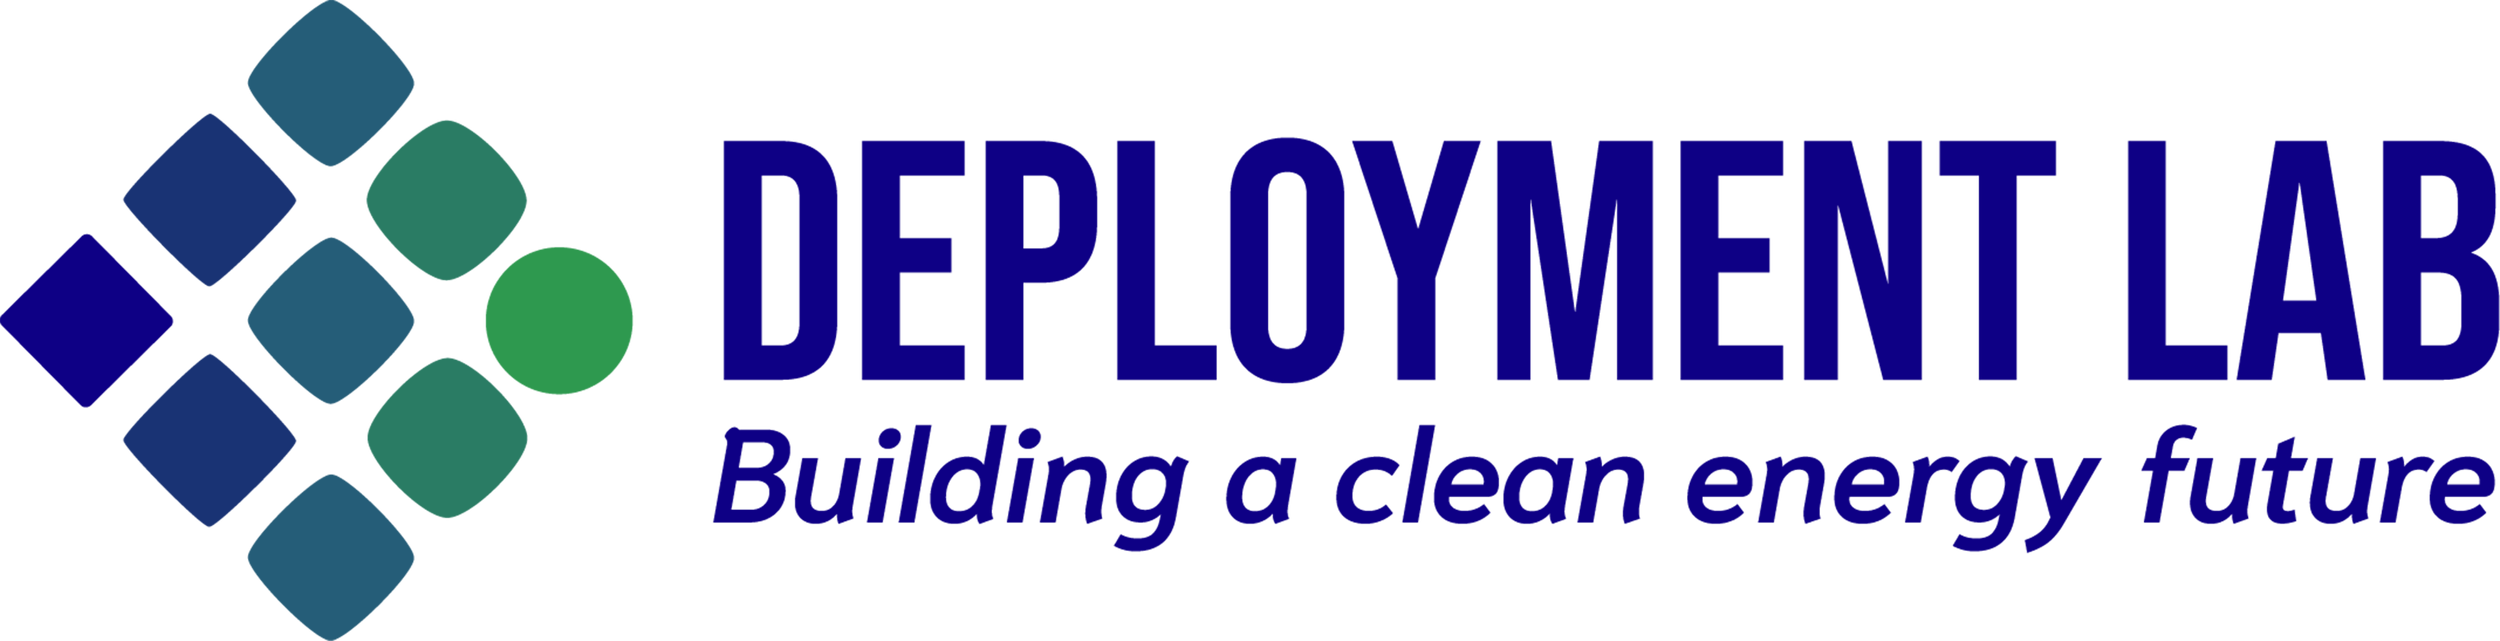 DeploymentLab-Logo_Horizontal-Color.png